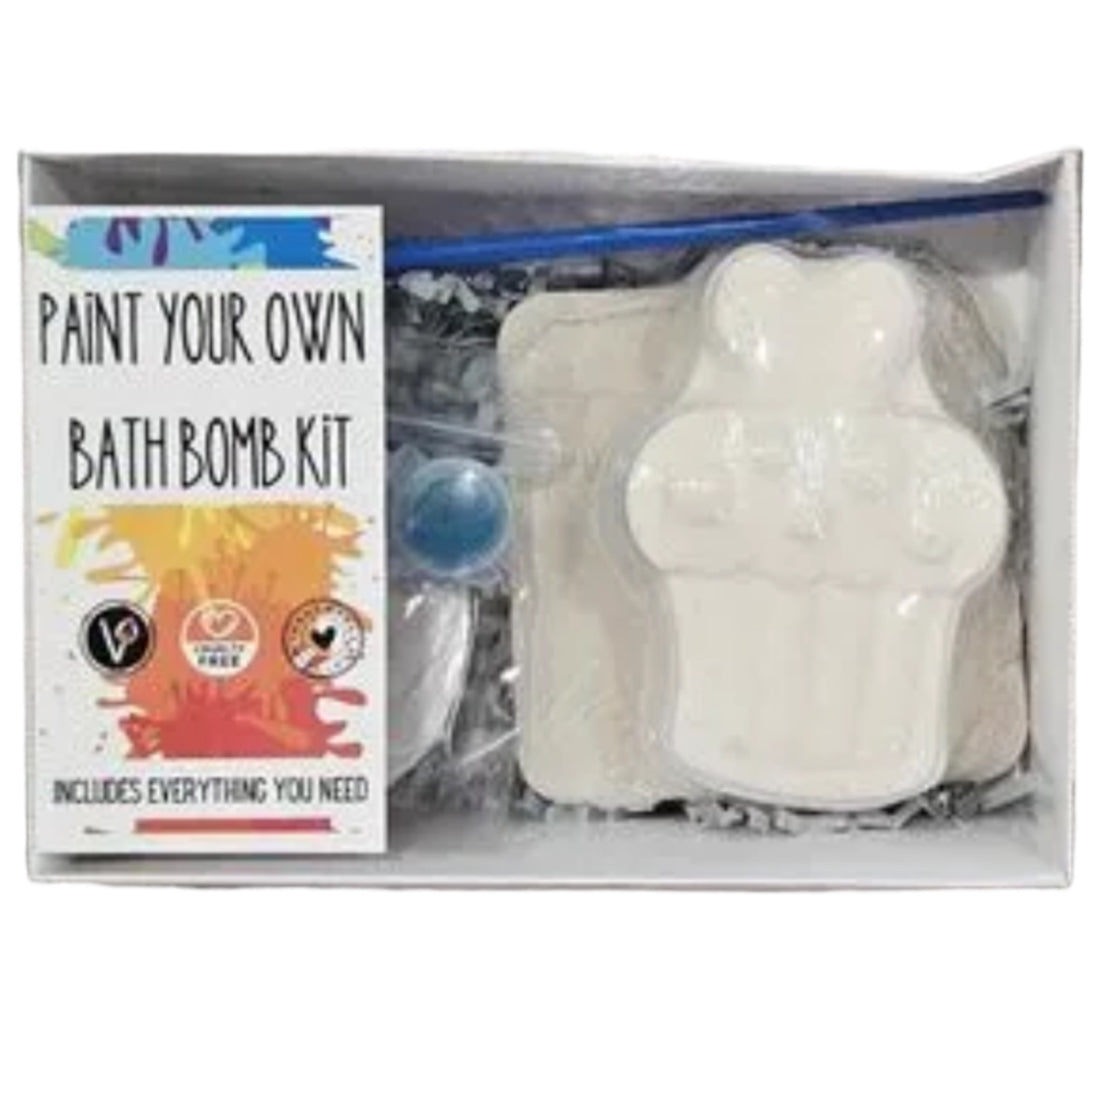 Cupcake Paint Your Own Bath Bomb Kit